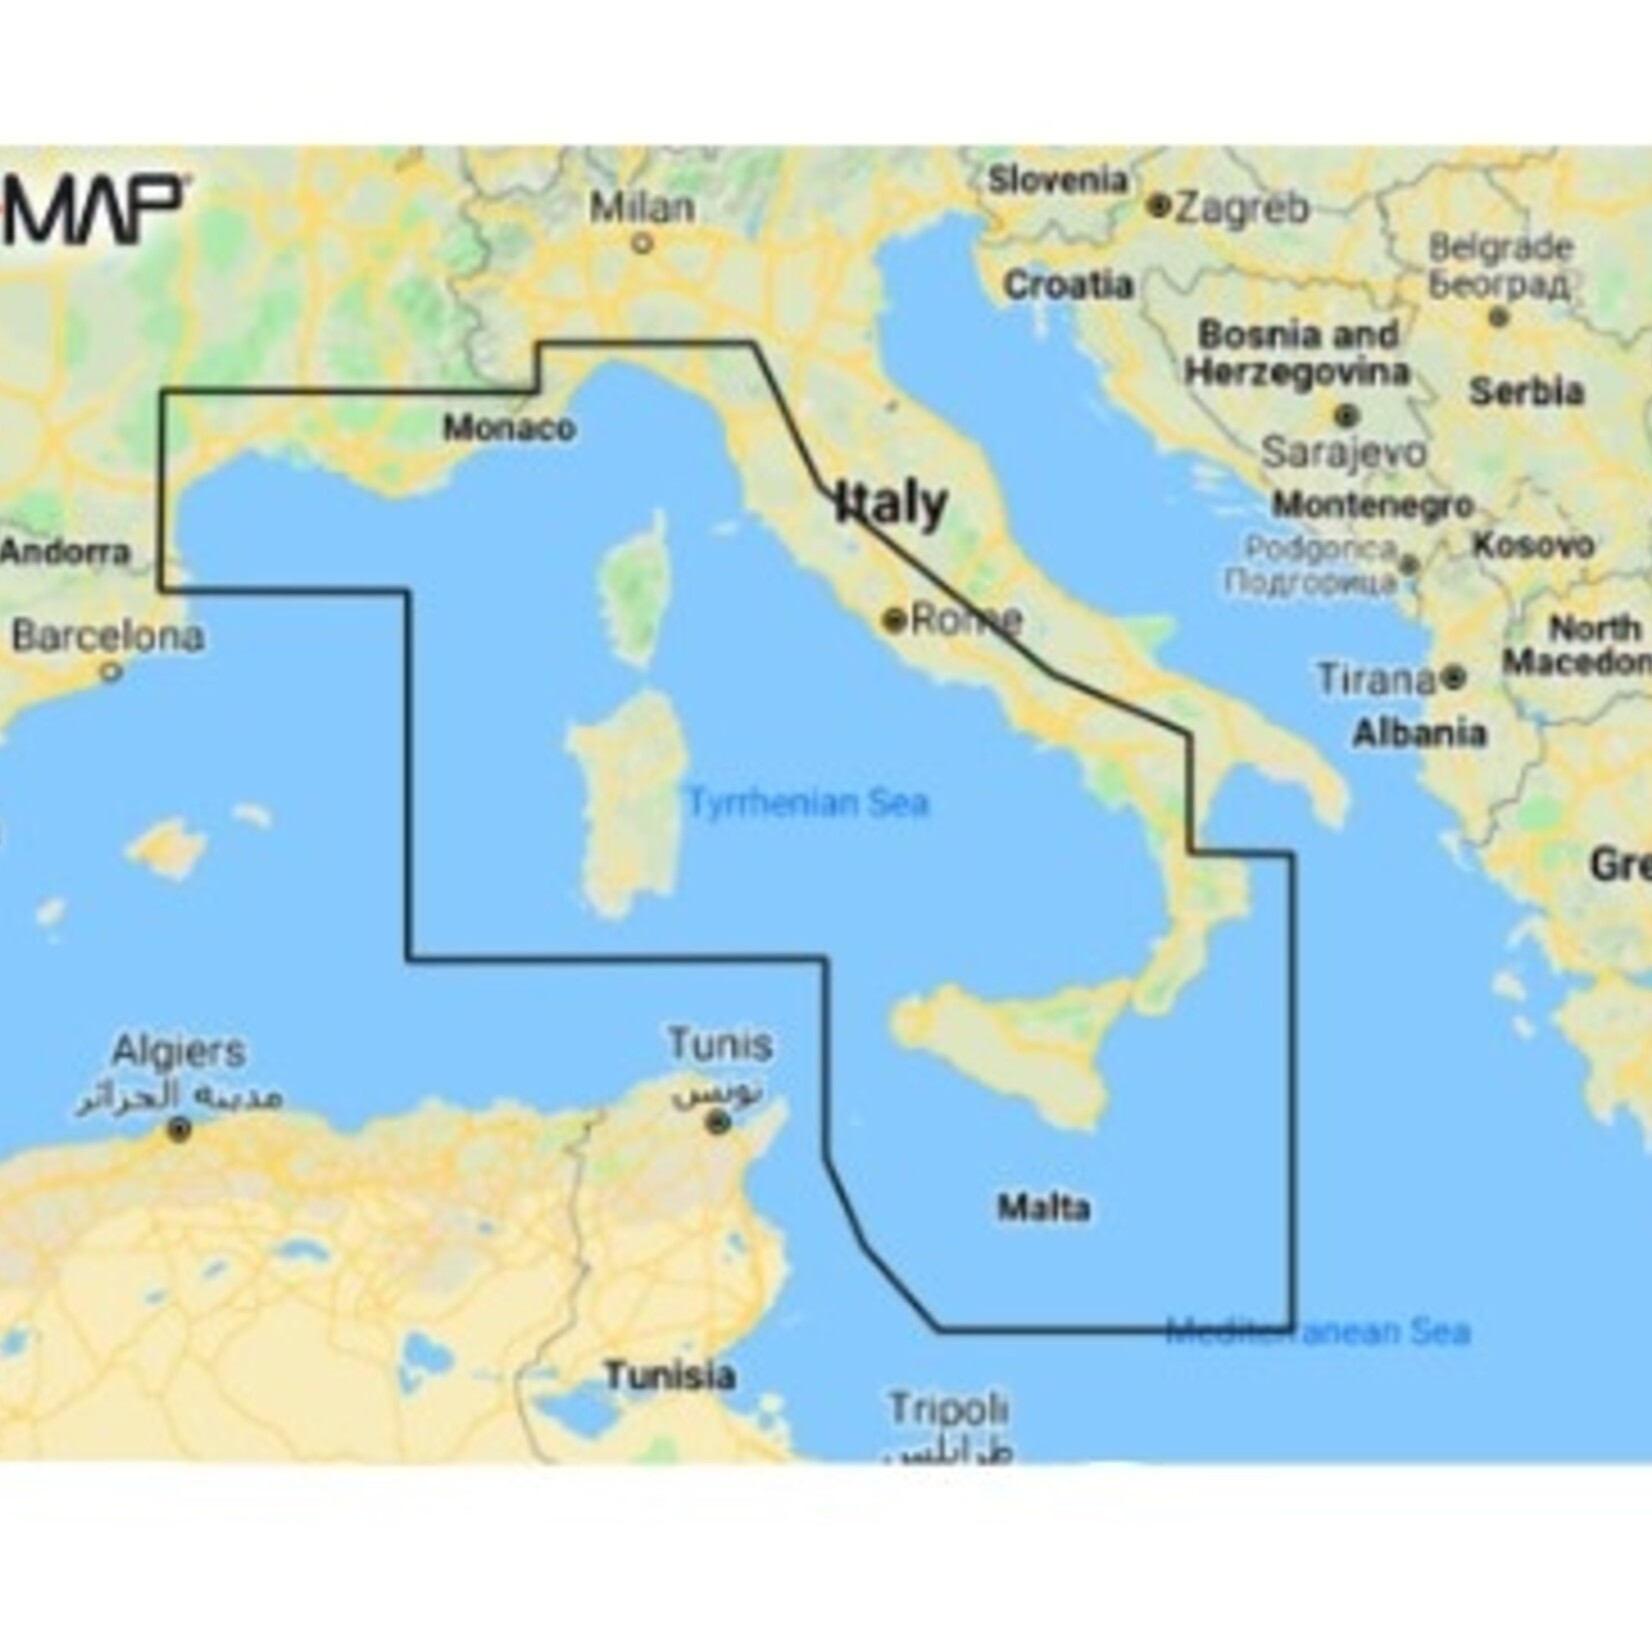 C-MAP DISCOVER - Central Mediterranean